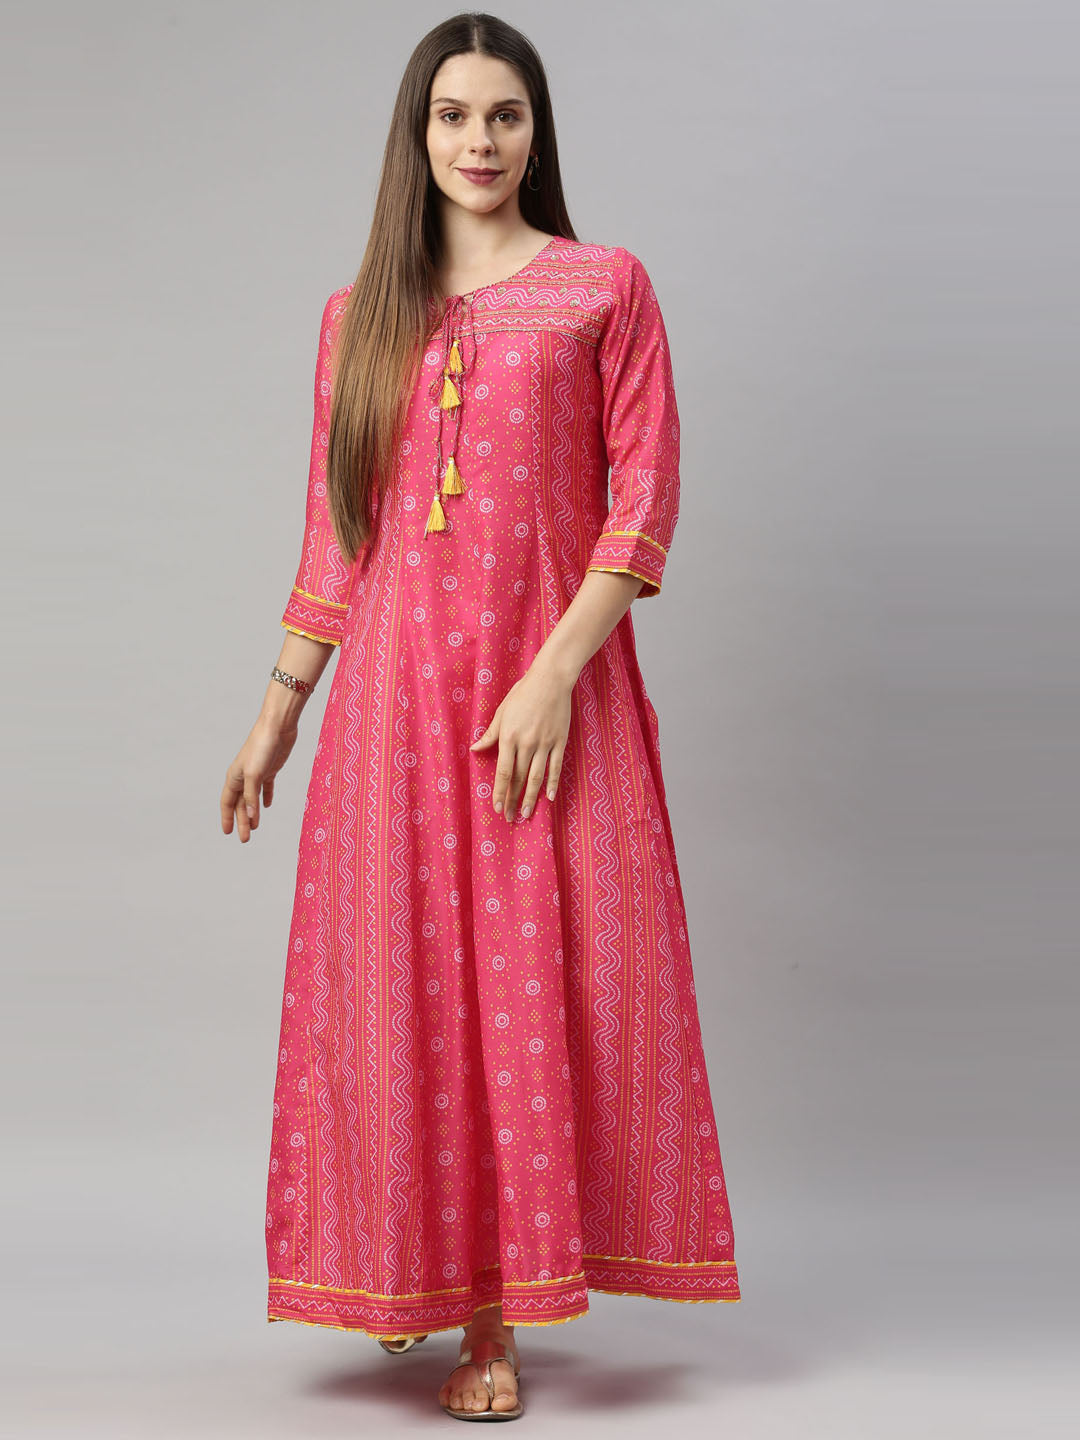 Neeru'S Pink Color, Muslin Fabric Tunic